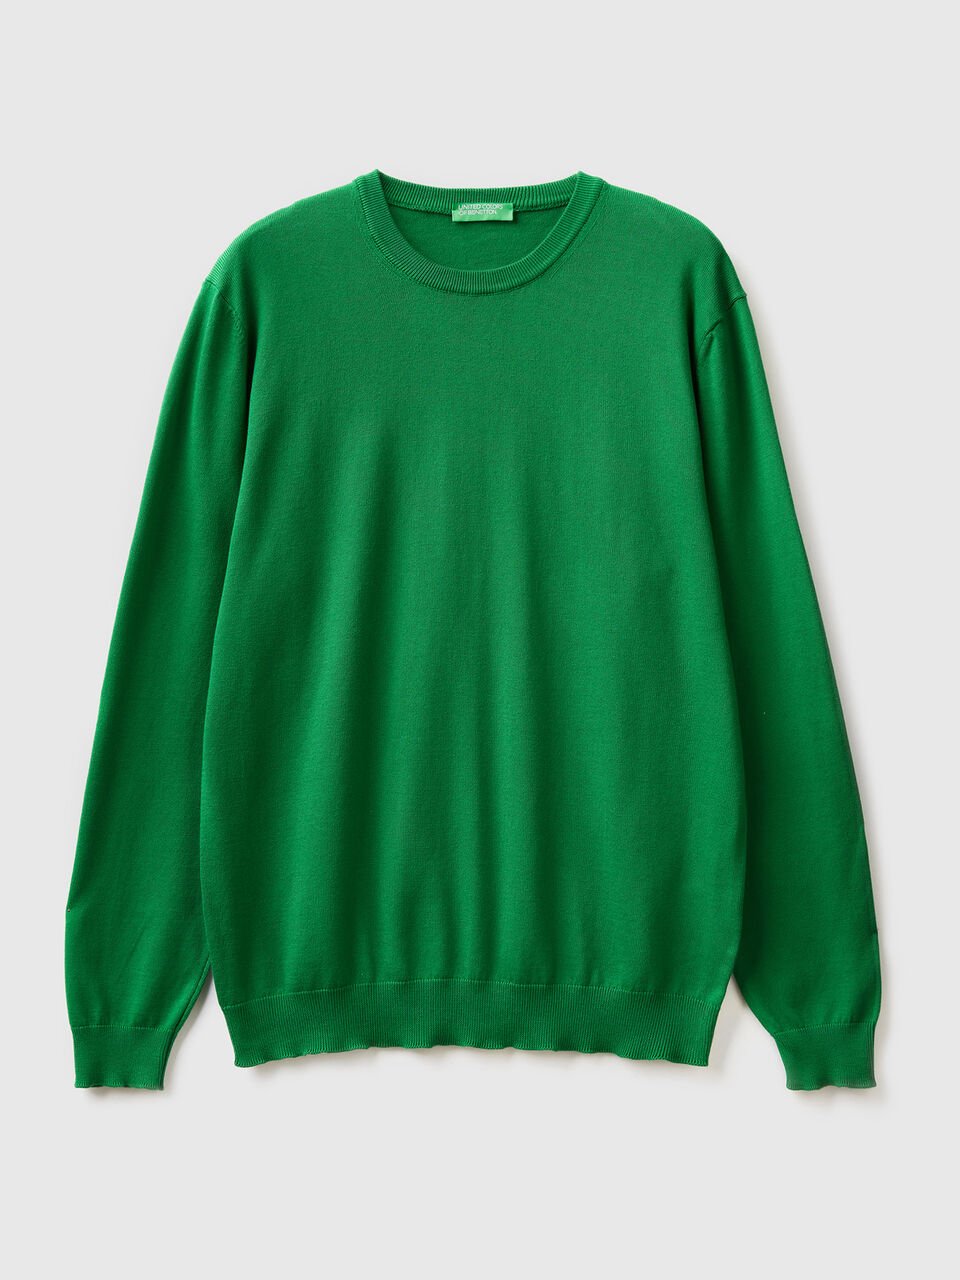 JustSweatshirts Unisex 100% Cotton Crewneck Sweatshirt Dark Green Small :  : Clothing, Shoes & Accessories